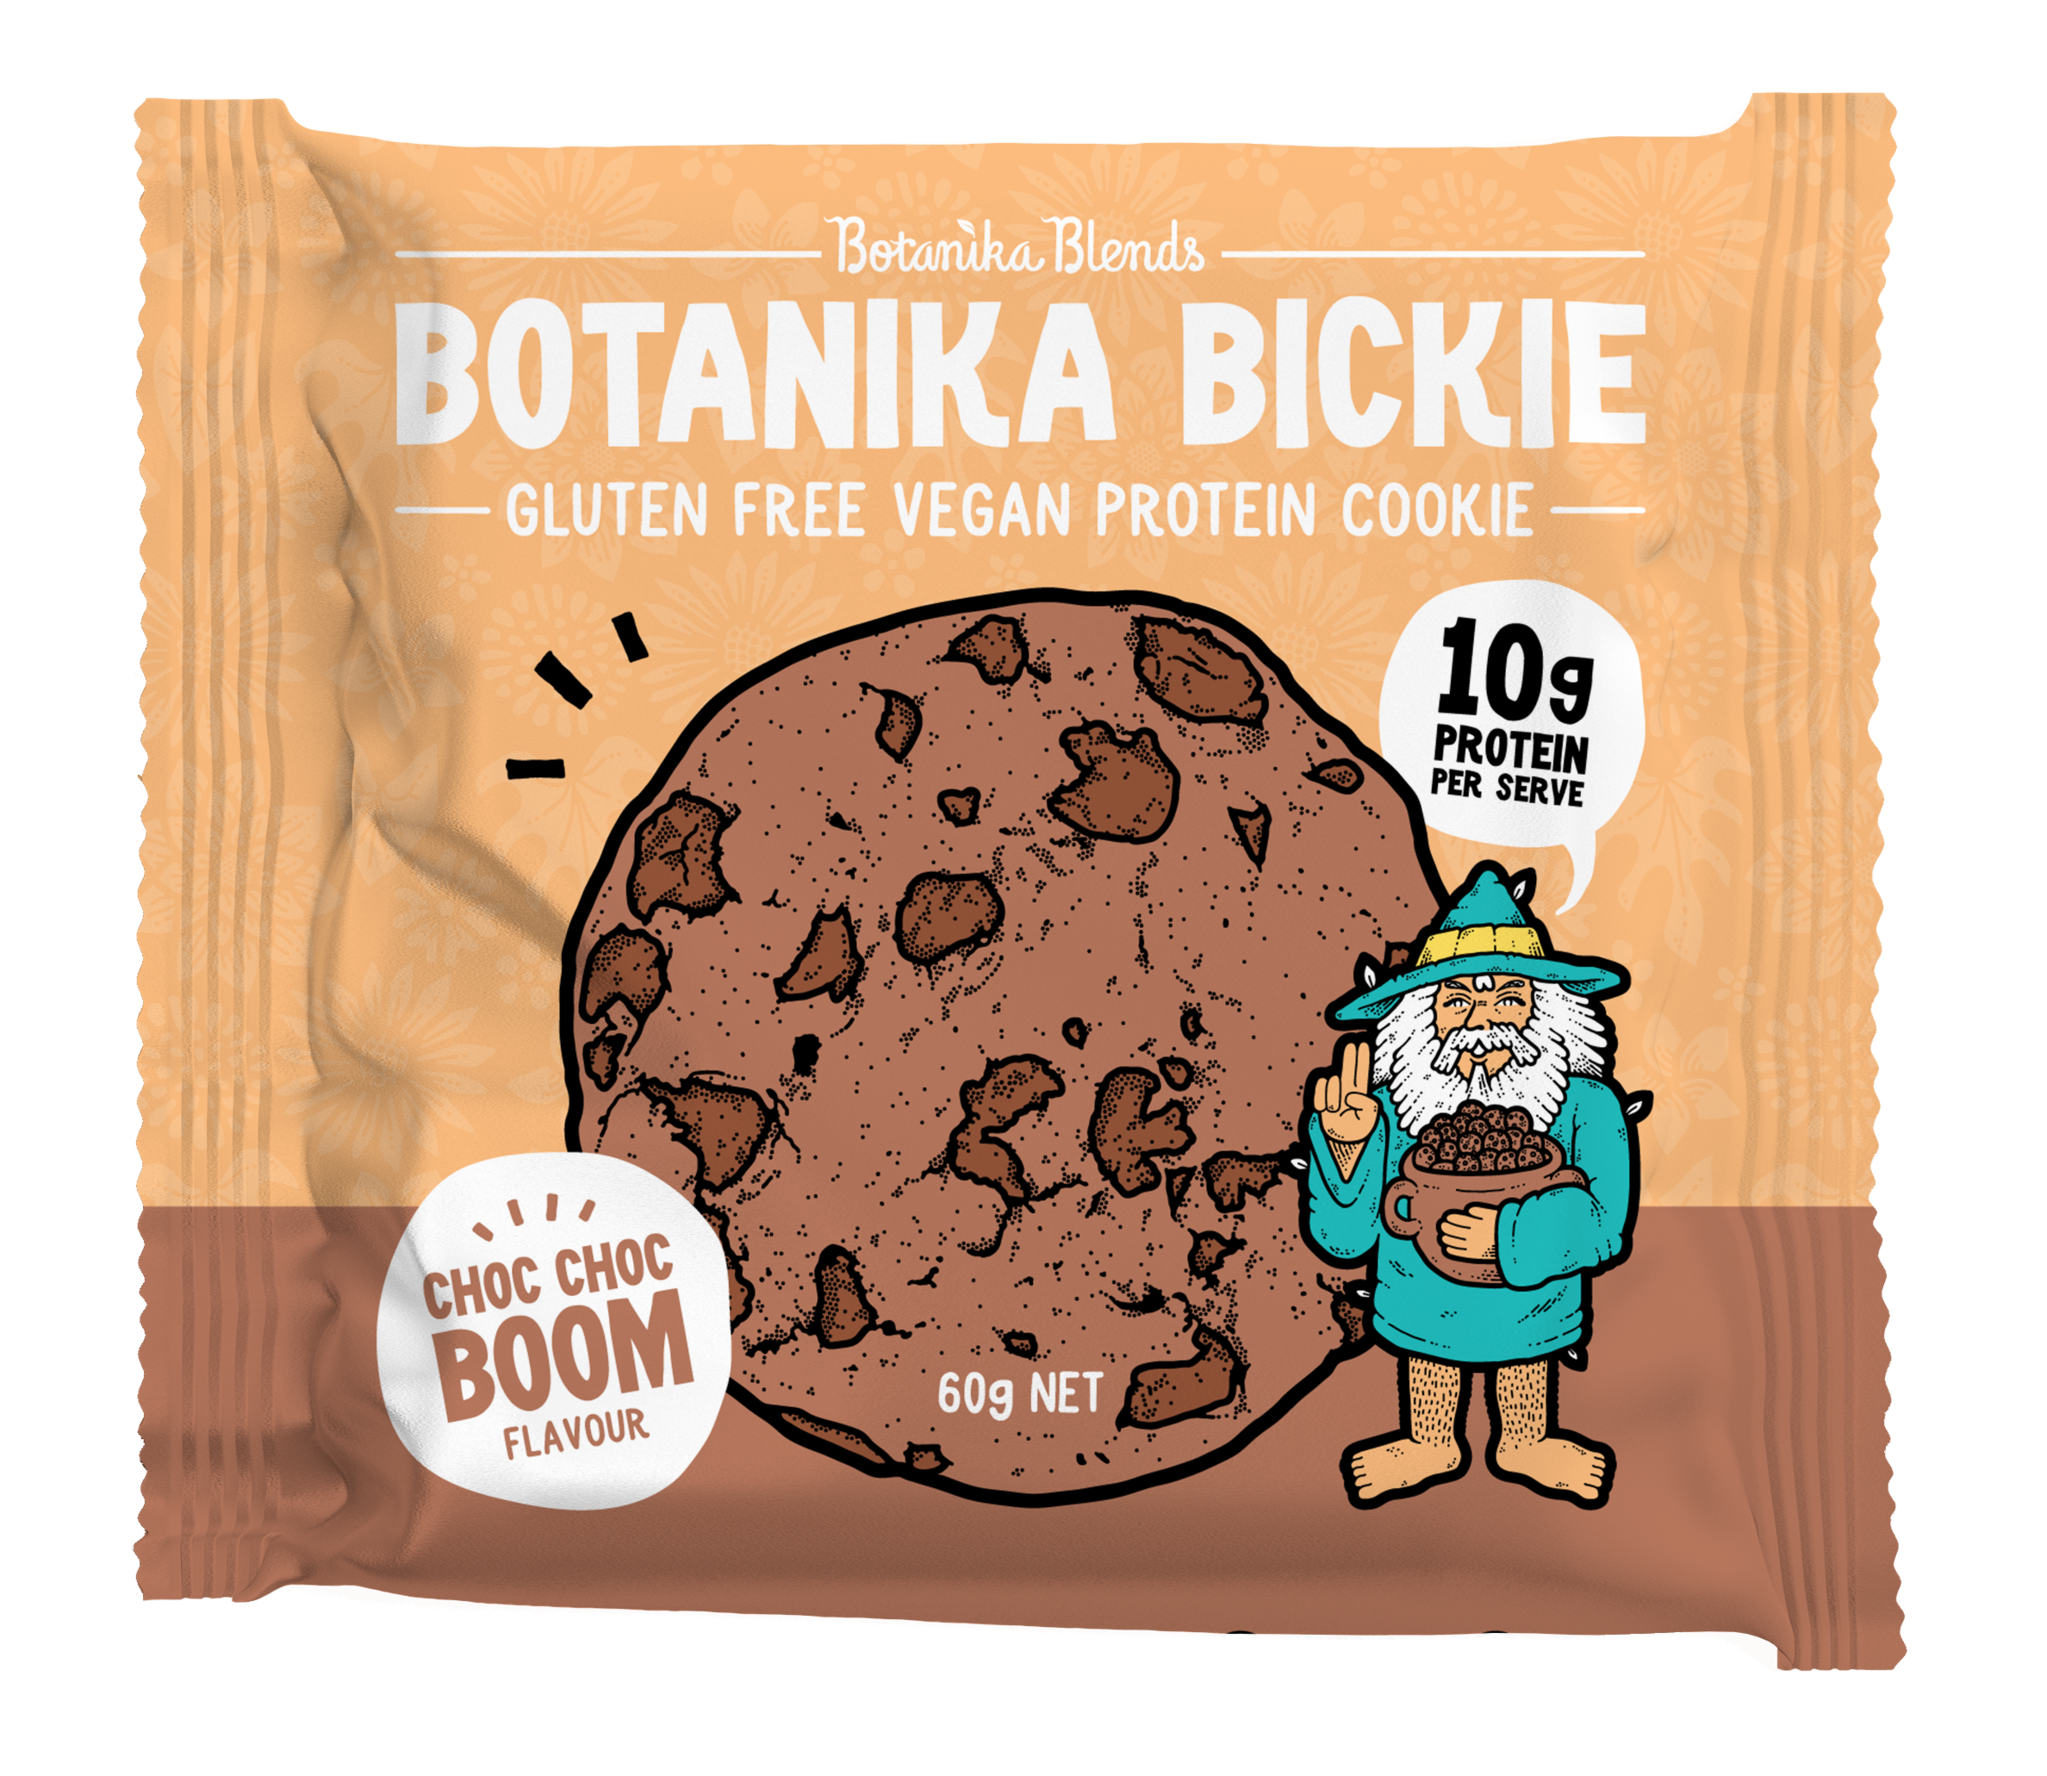 botanika blends bickie vegan protein cookie- choc choc boom